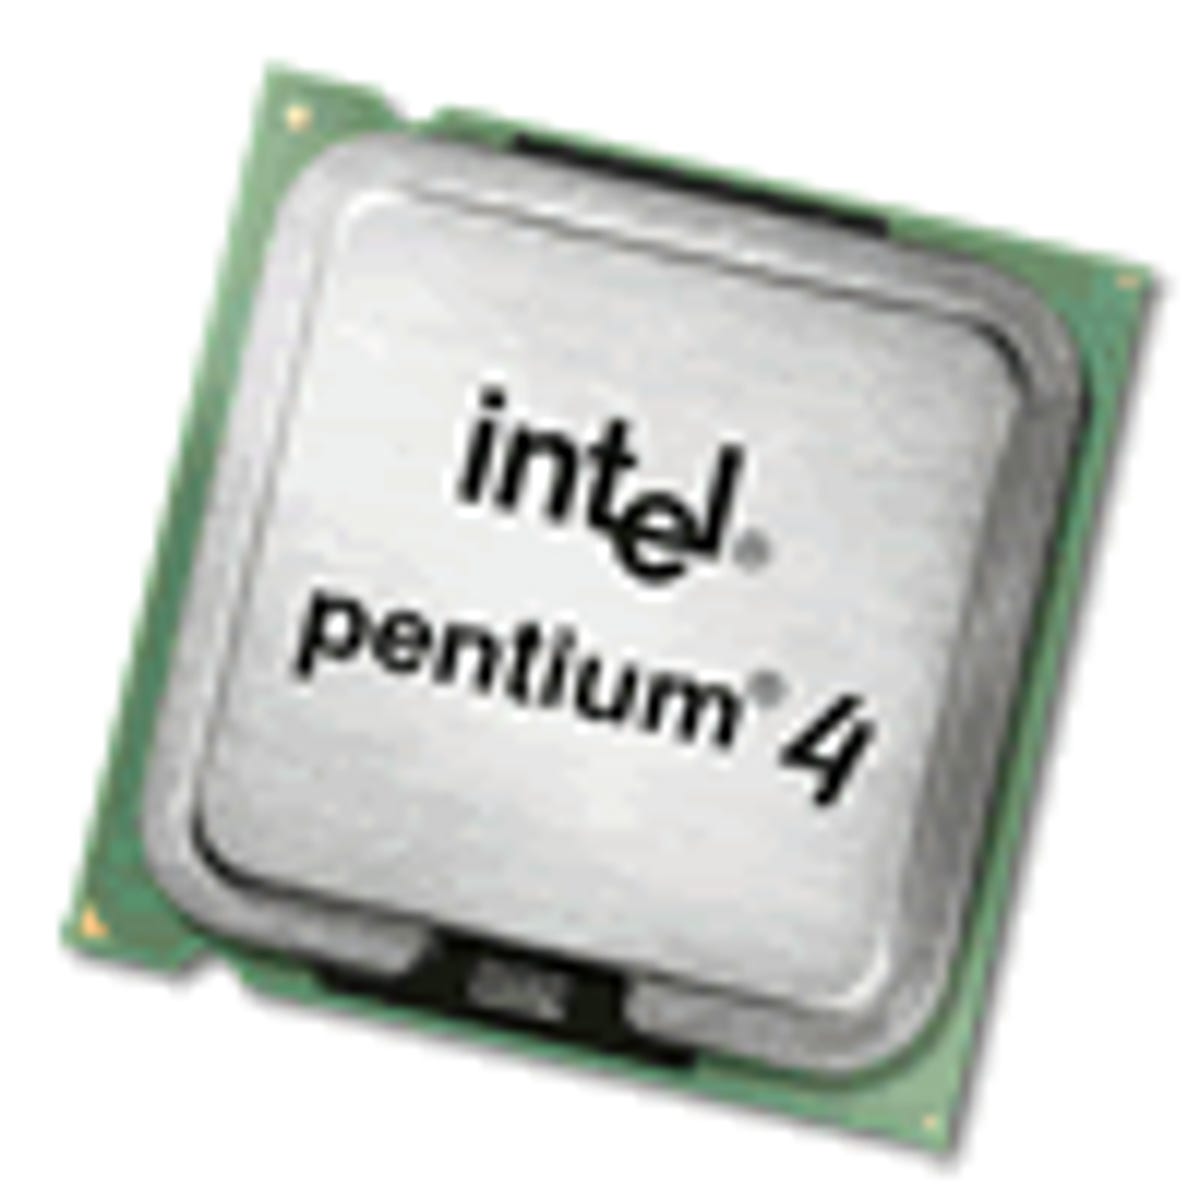 Интел коре пентиум. Процессор Intel Pentium 4 531 Prescott. Процессор Intel 04 Pentium 4. Процессор Intel Pentium 4 521 Prescott. Процессор 775 Intel Pentium 4 519k 3.06 GHZ.